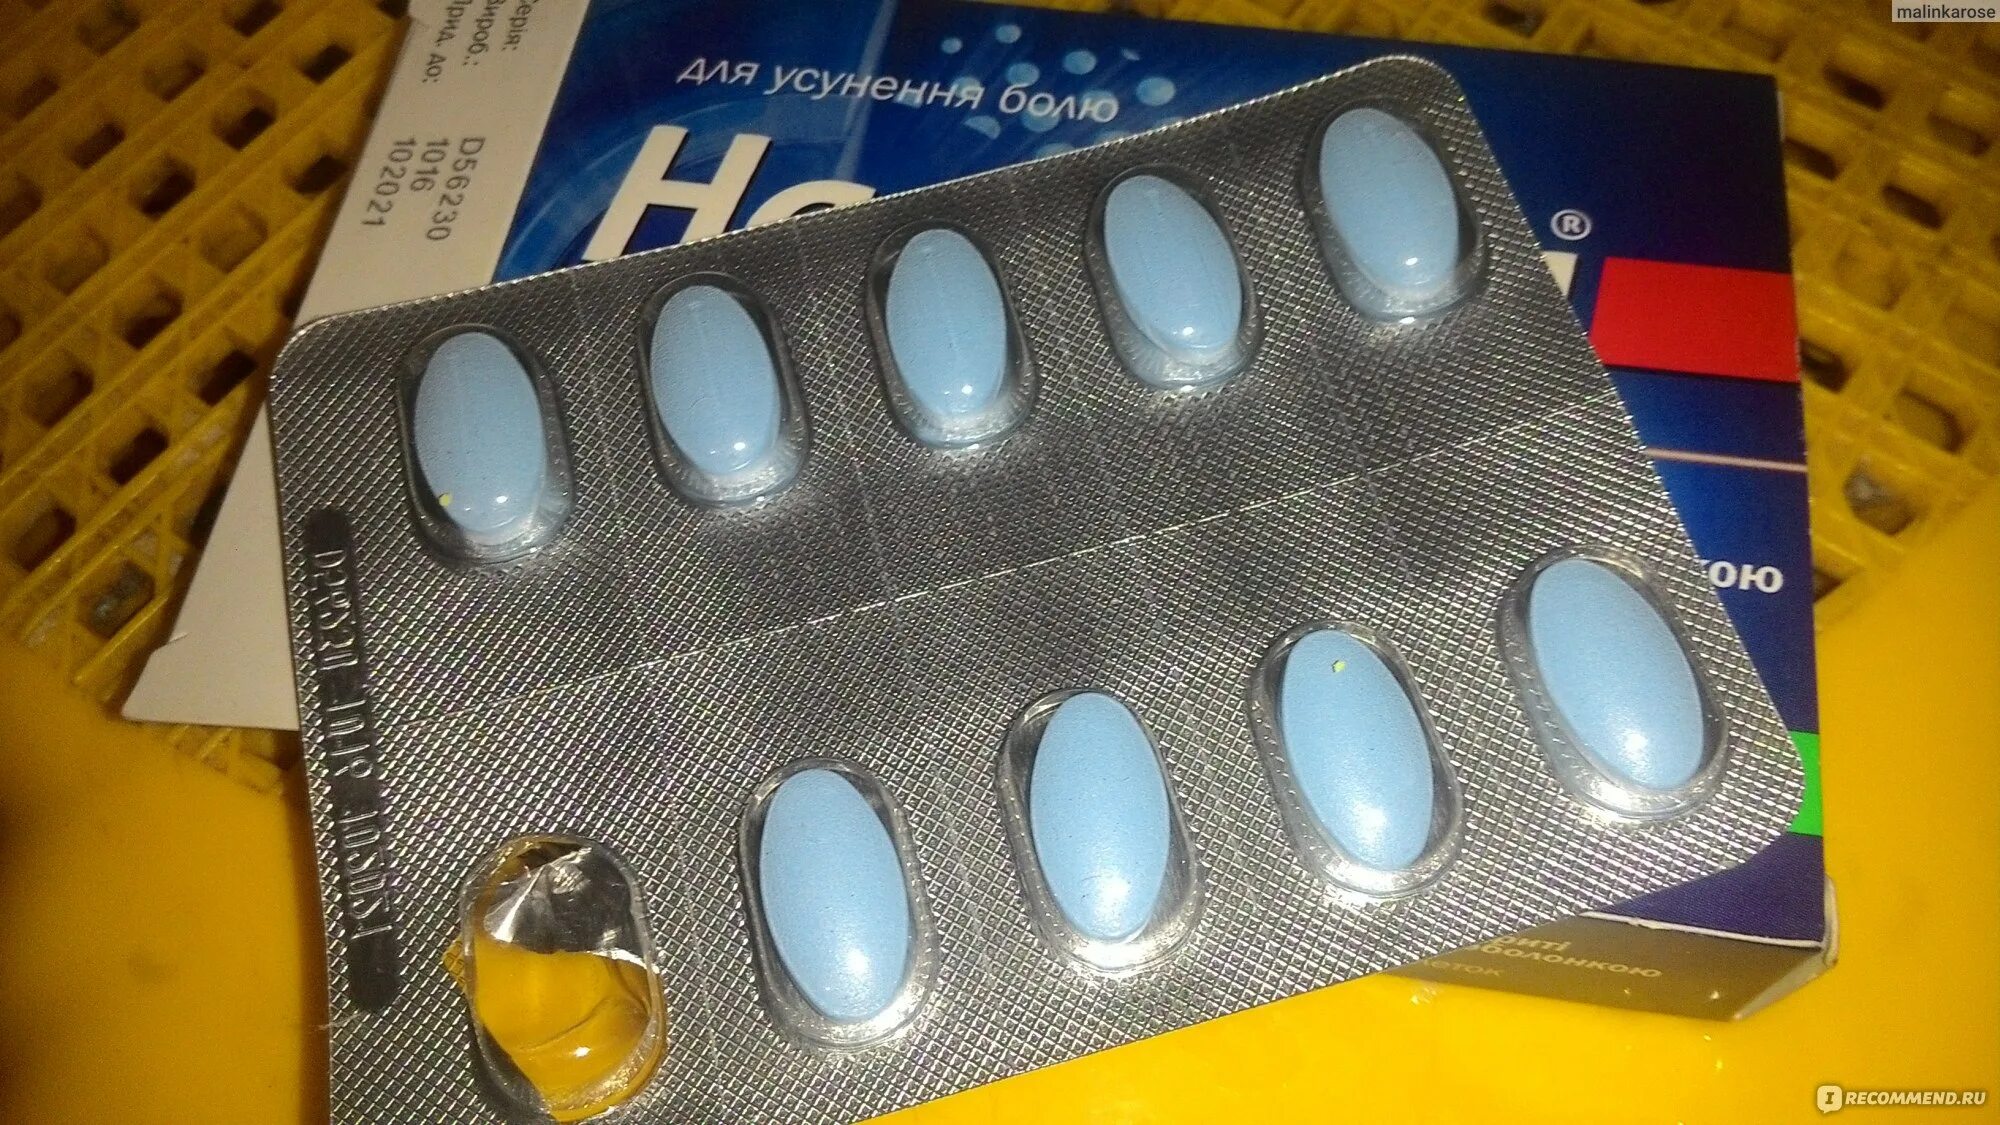 Синие таблетки обезболивающие. Голубые таблетки обезболивающие. Синие обезоболевающие табл. Таблетка обезболивающая голубая.